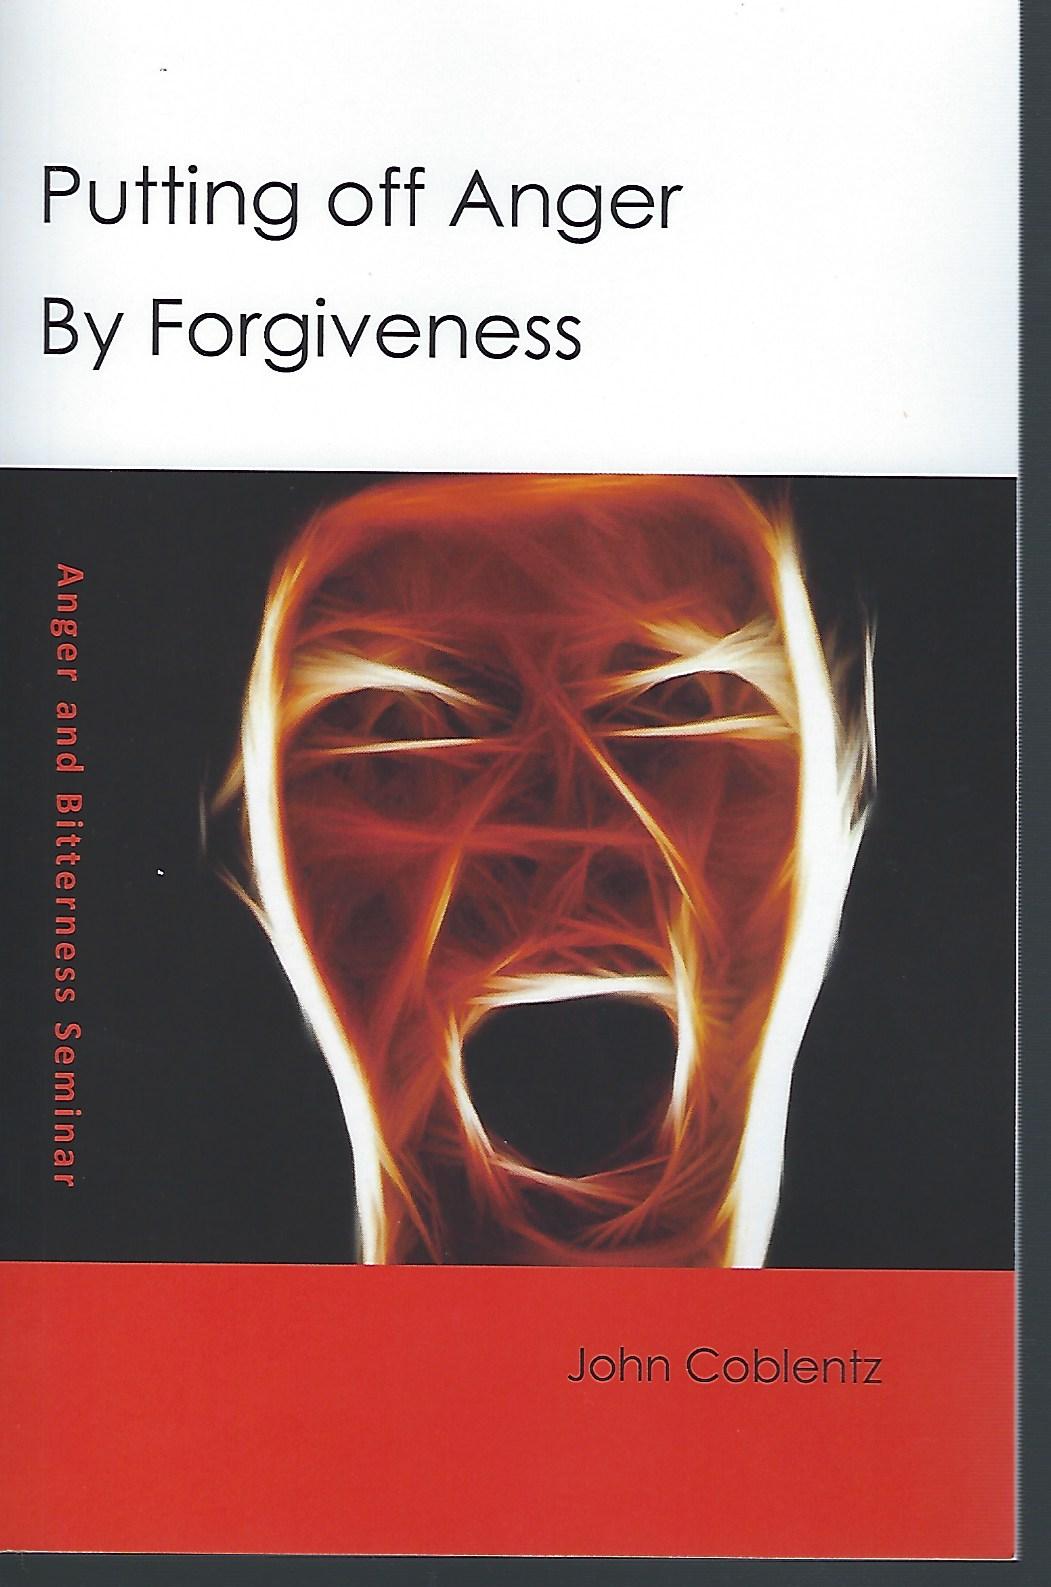 Putting of Anger by Forgiveness John Coblentz